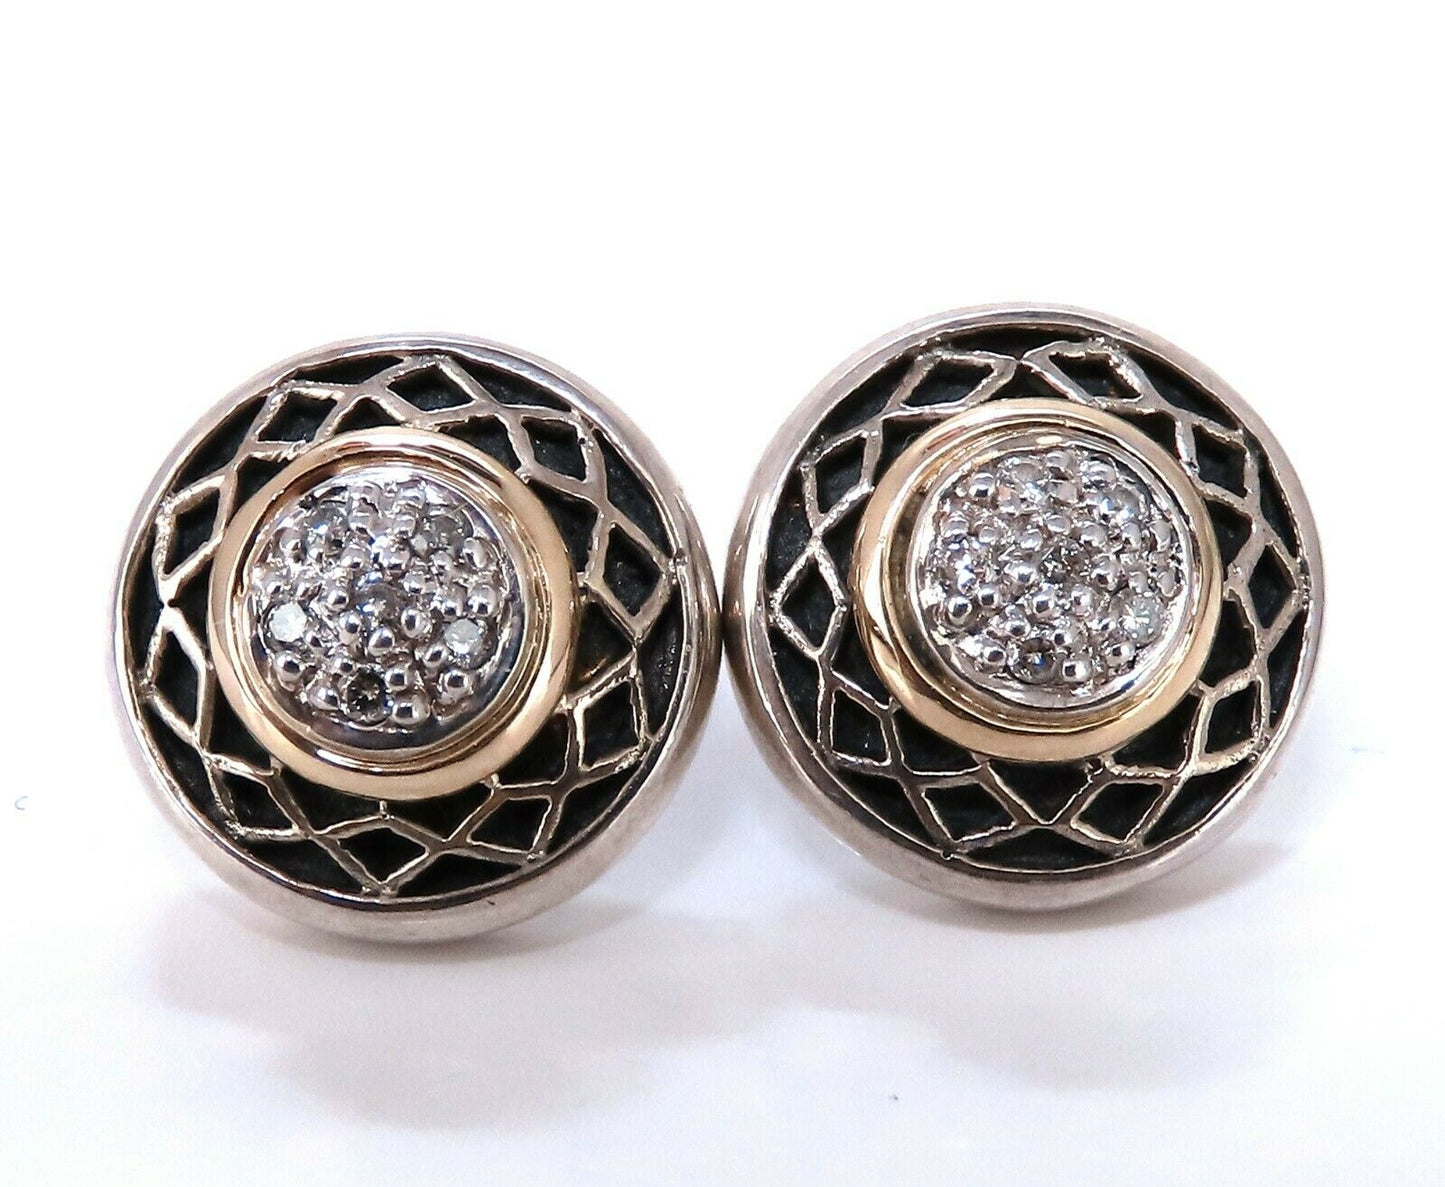 Designer Bordeaux.10ct natural diamond earrings cross hatch deco silver & 14kt